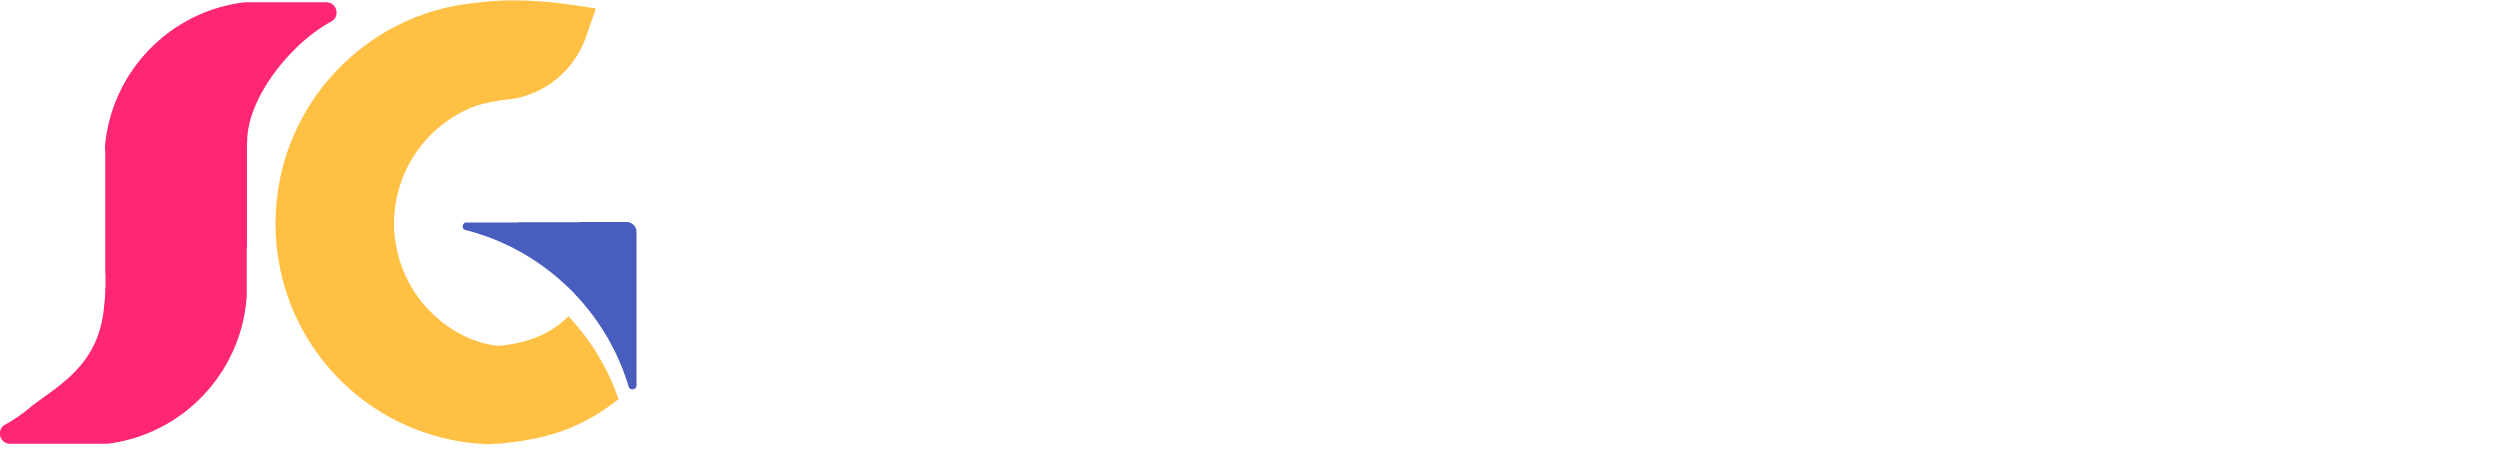 logo-septembergrowth.png